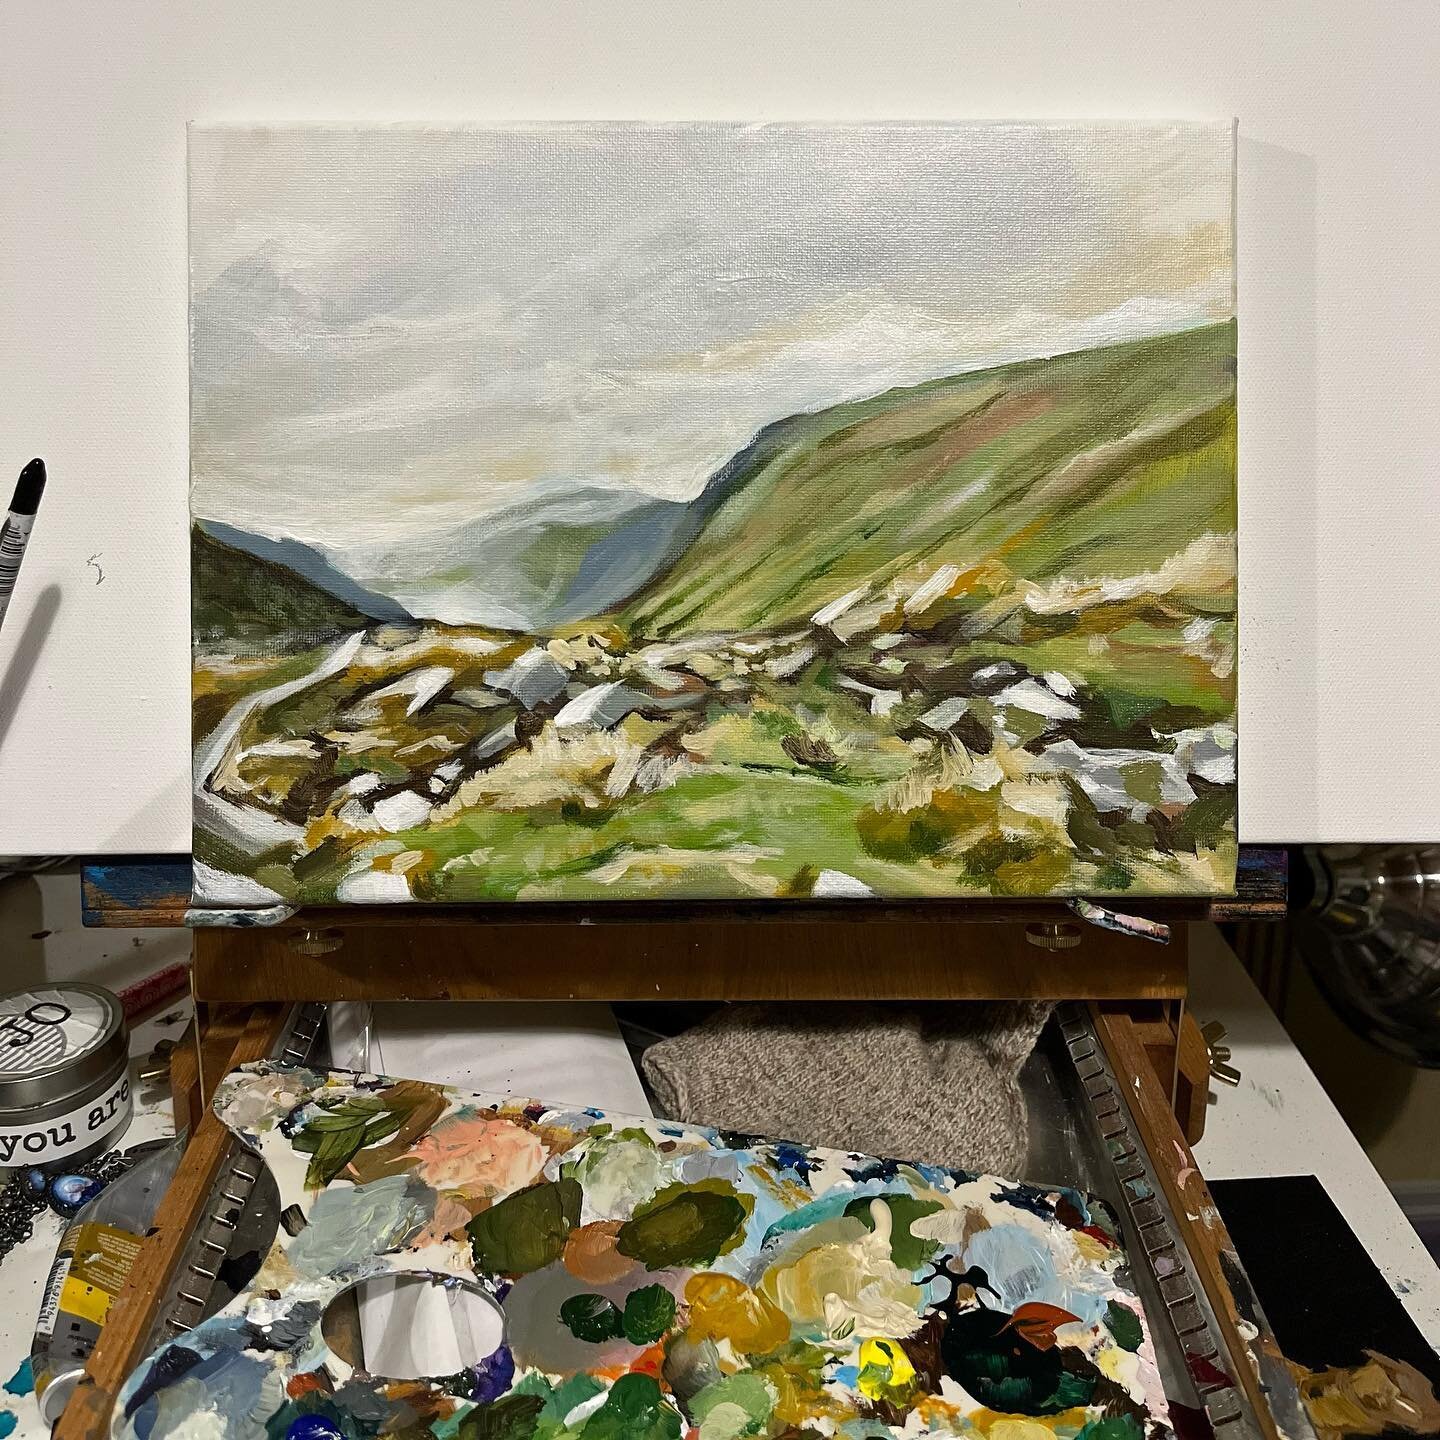 Little Irish landscape WIP for today #ireland #landscapepainting #glendalough #painting #acryliconcanvas #acrylicpainting #practice